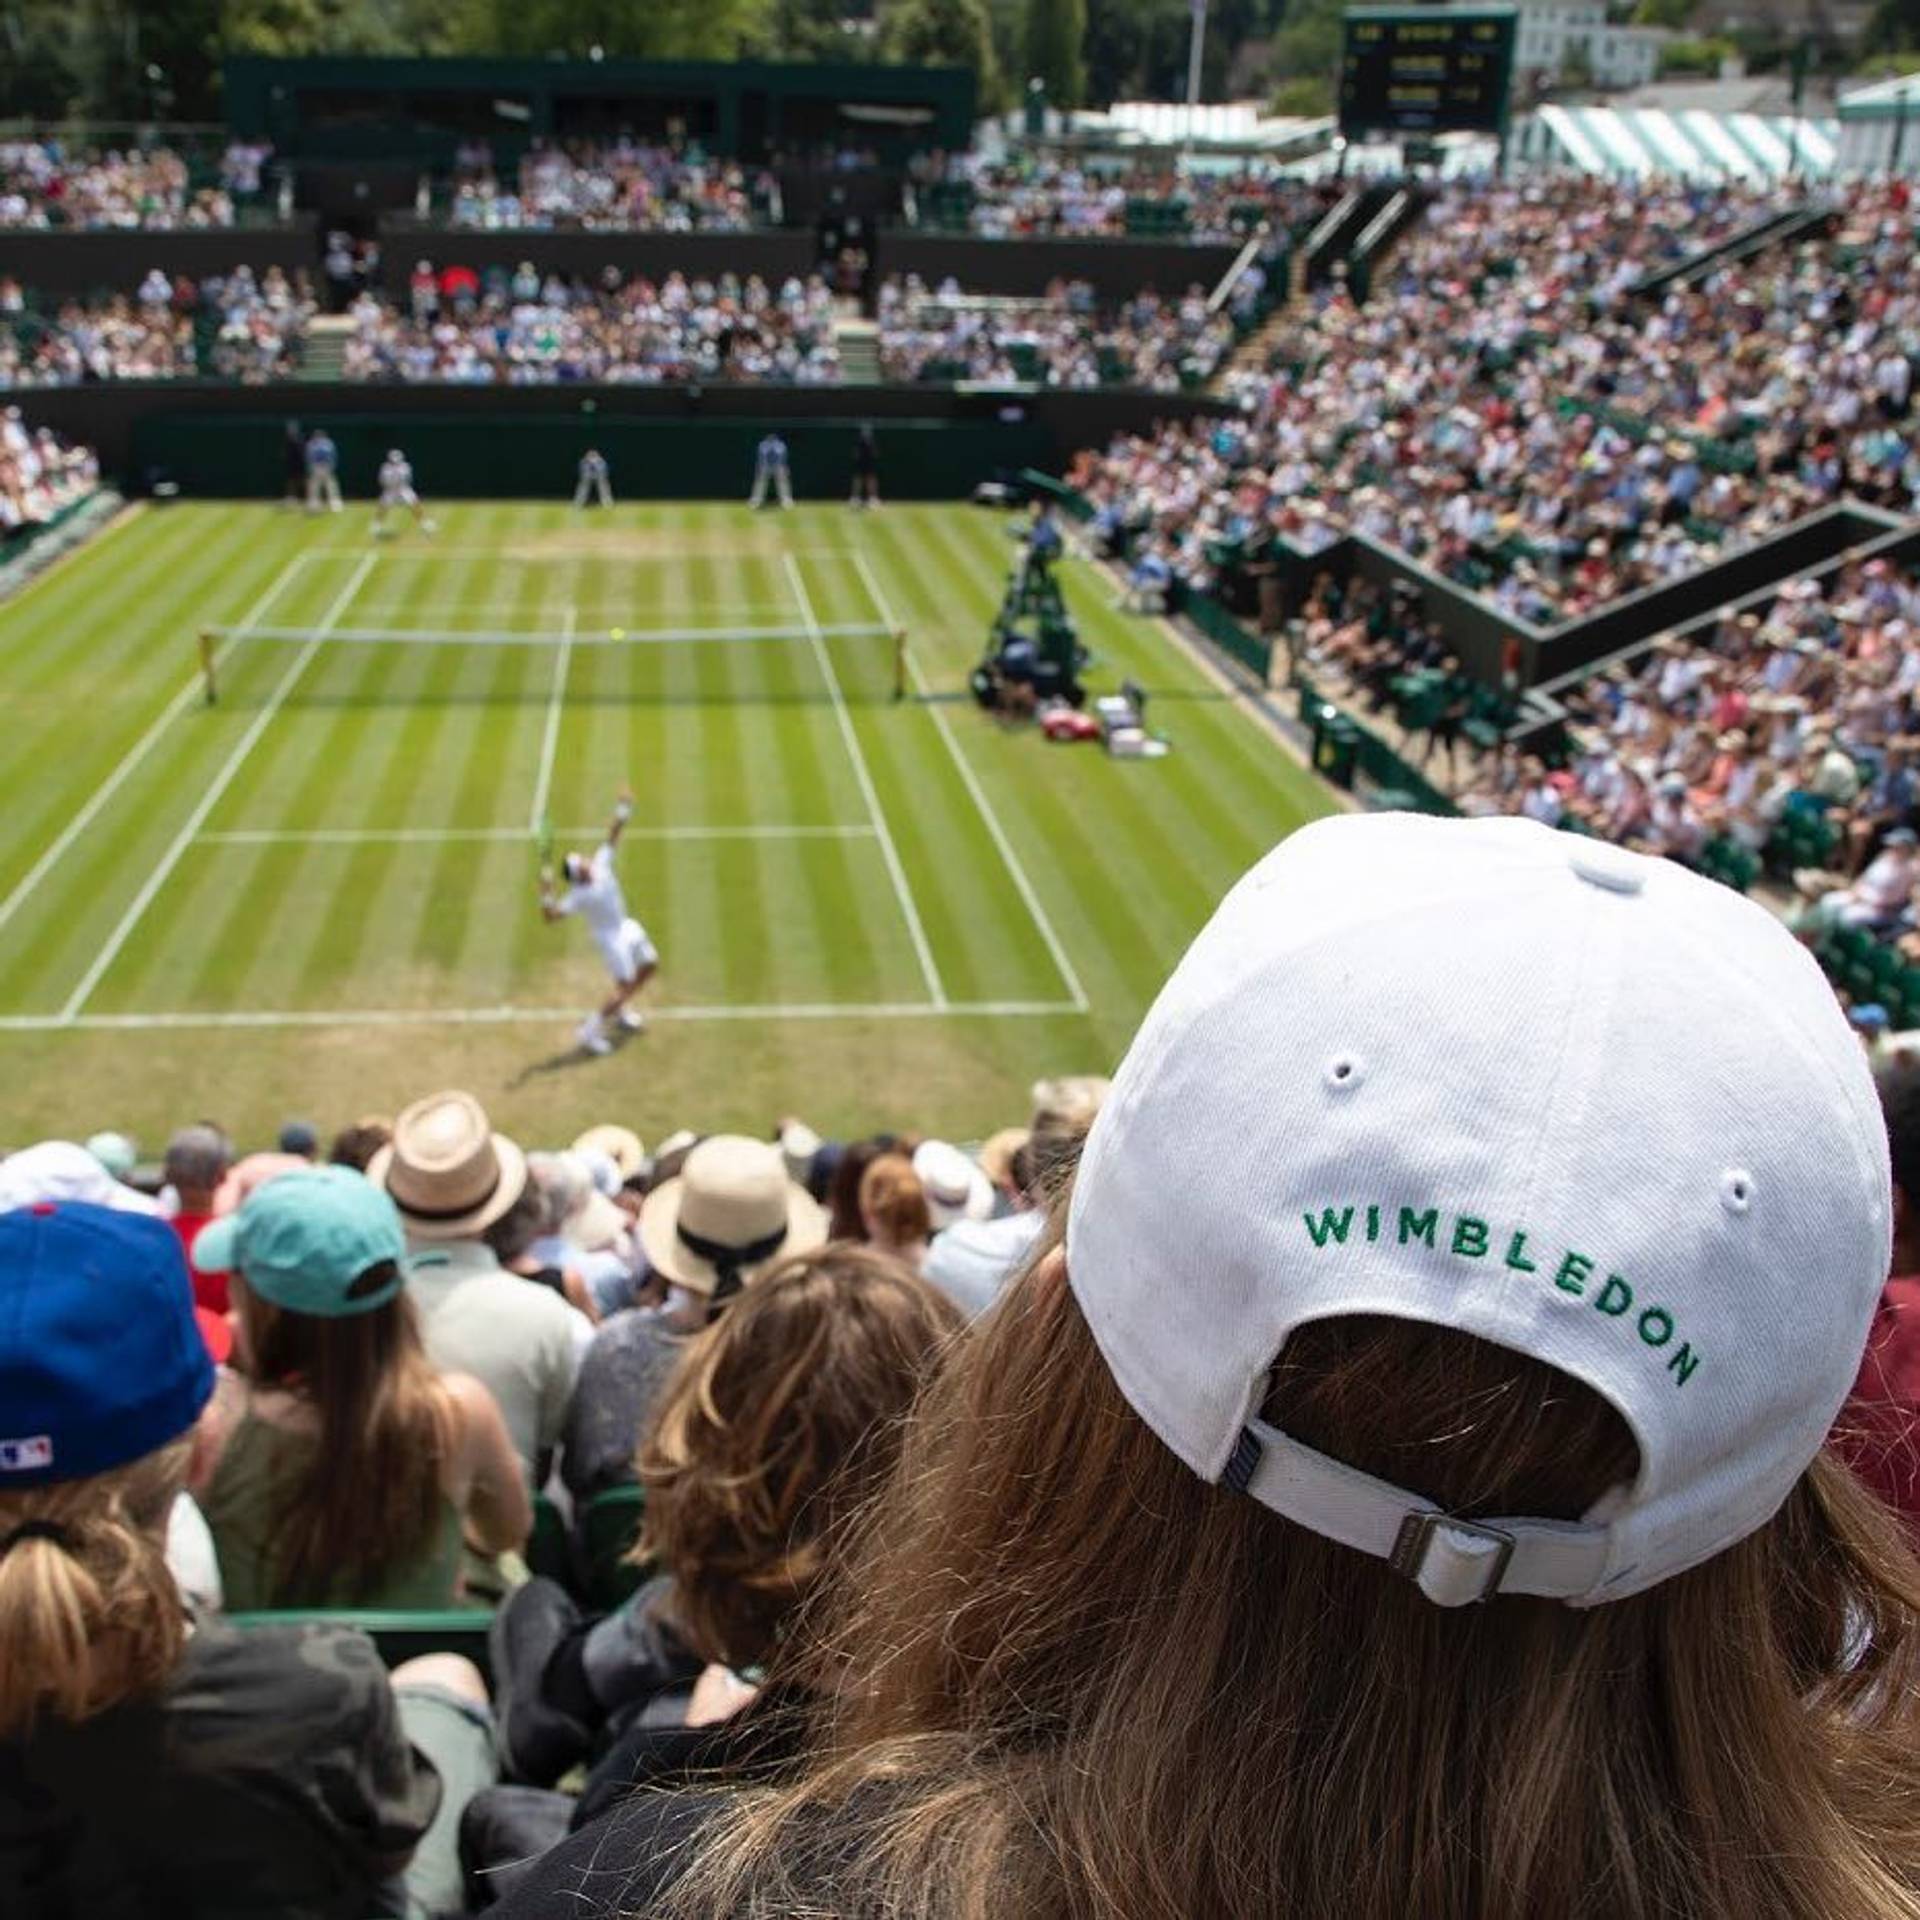 Wimbledon ad reminds fans of its prestigious history